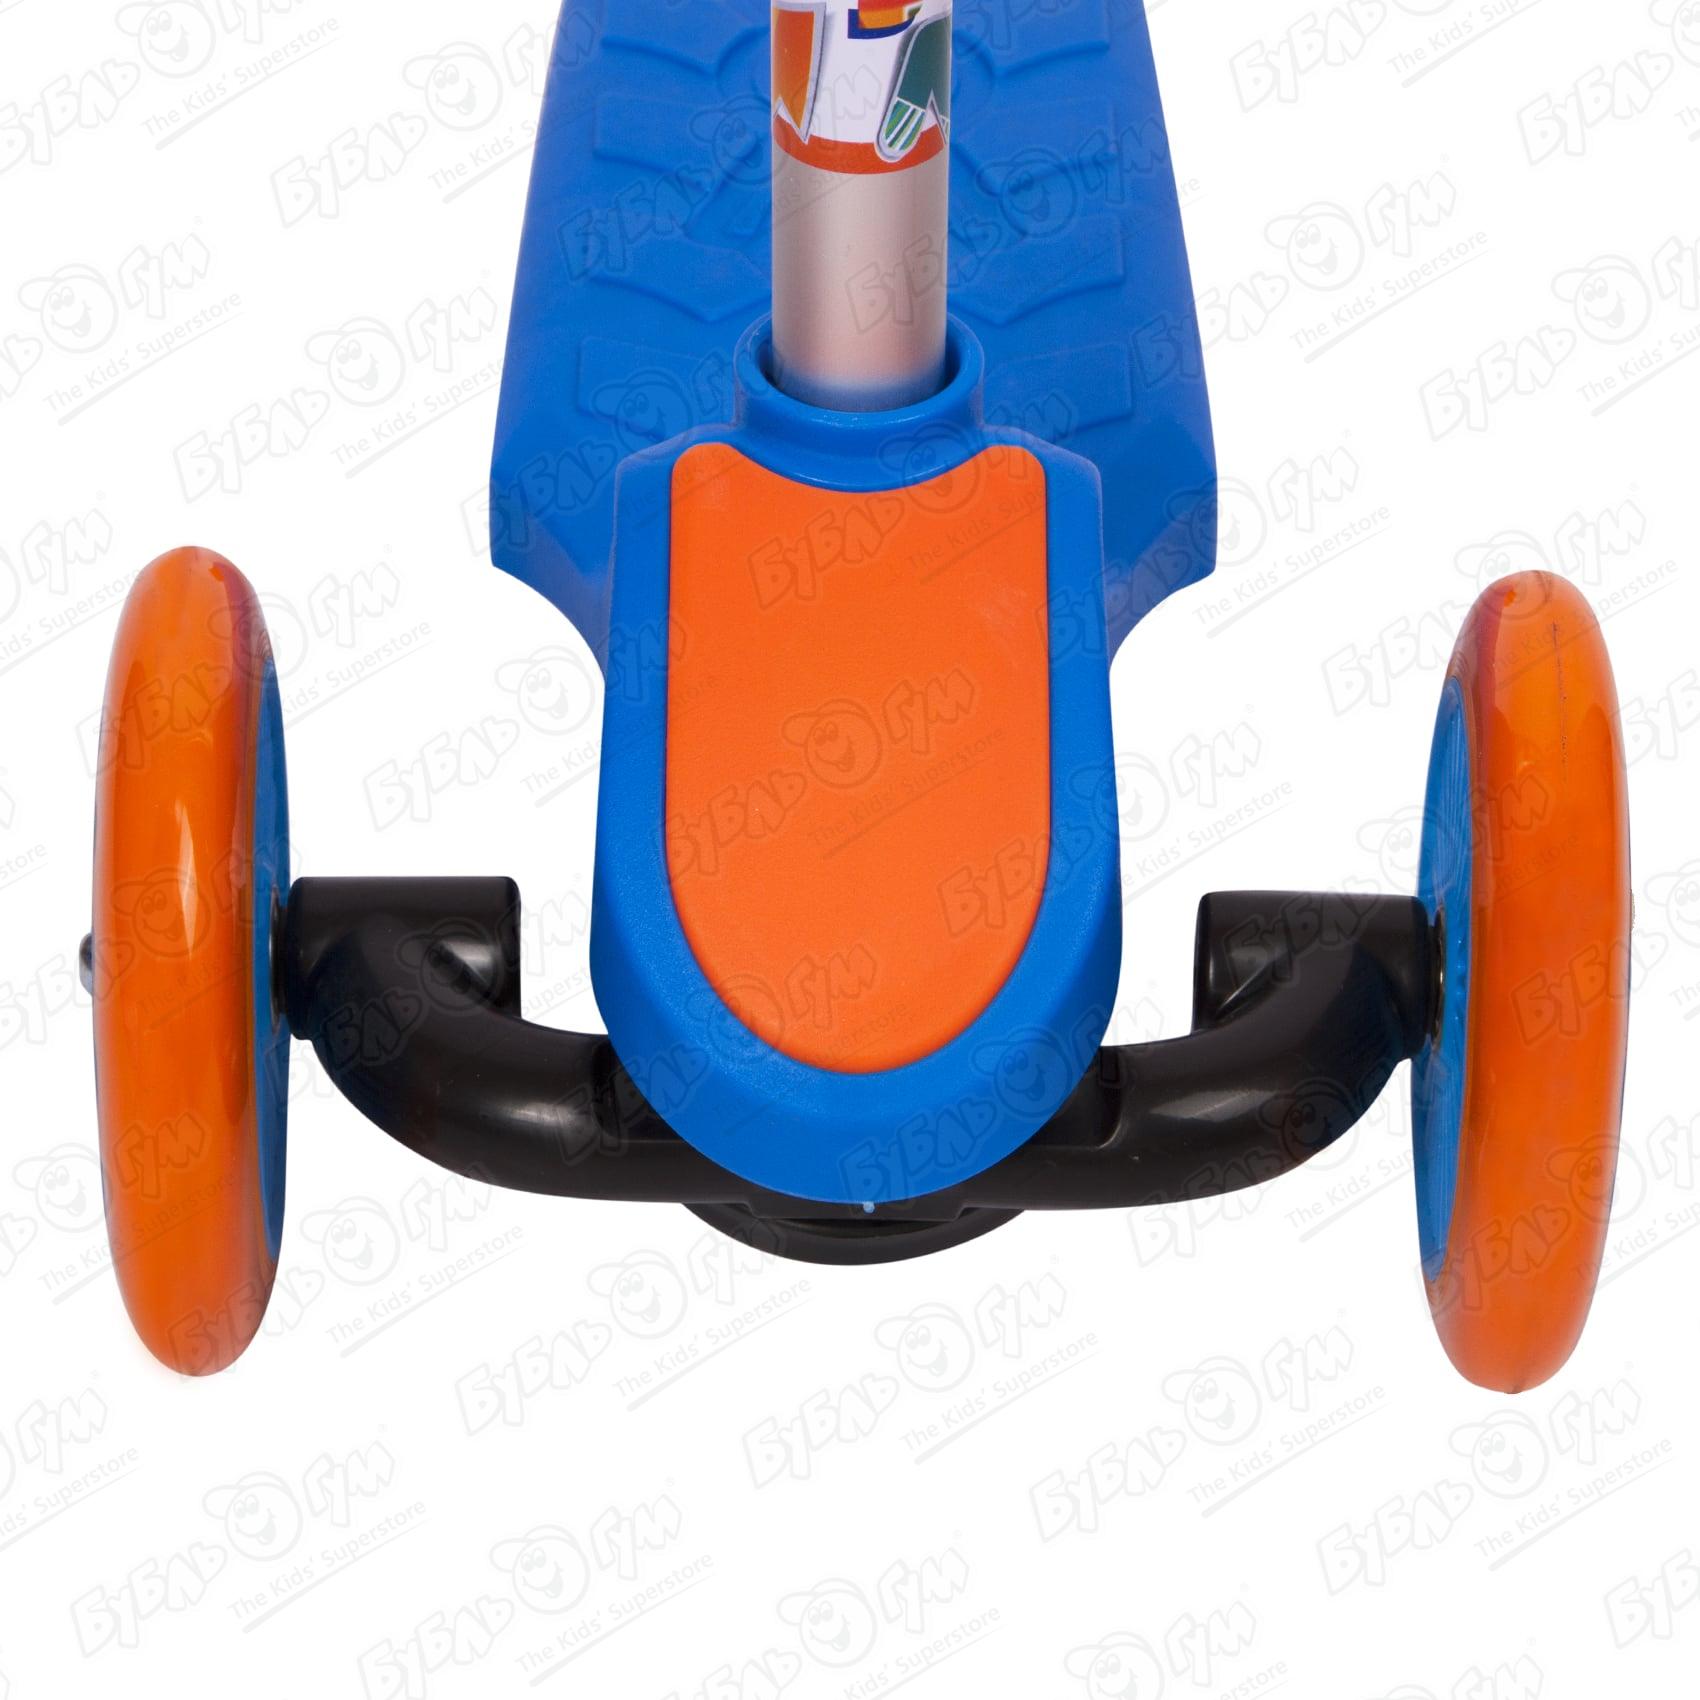 Самокат ROLLO PRO трехколесный оранжево-синий, размер 120 мм/80 мм - фото 9